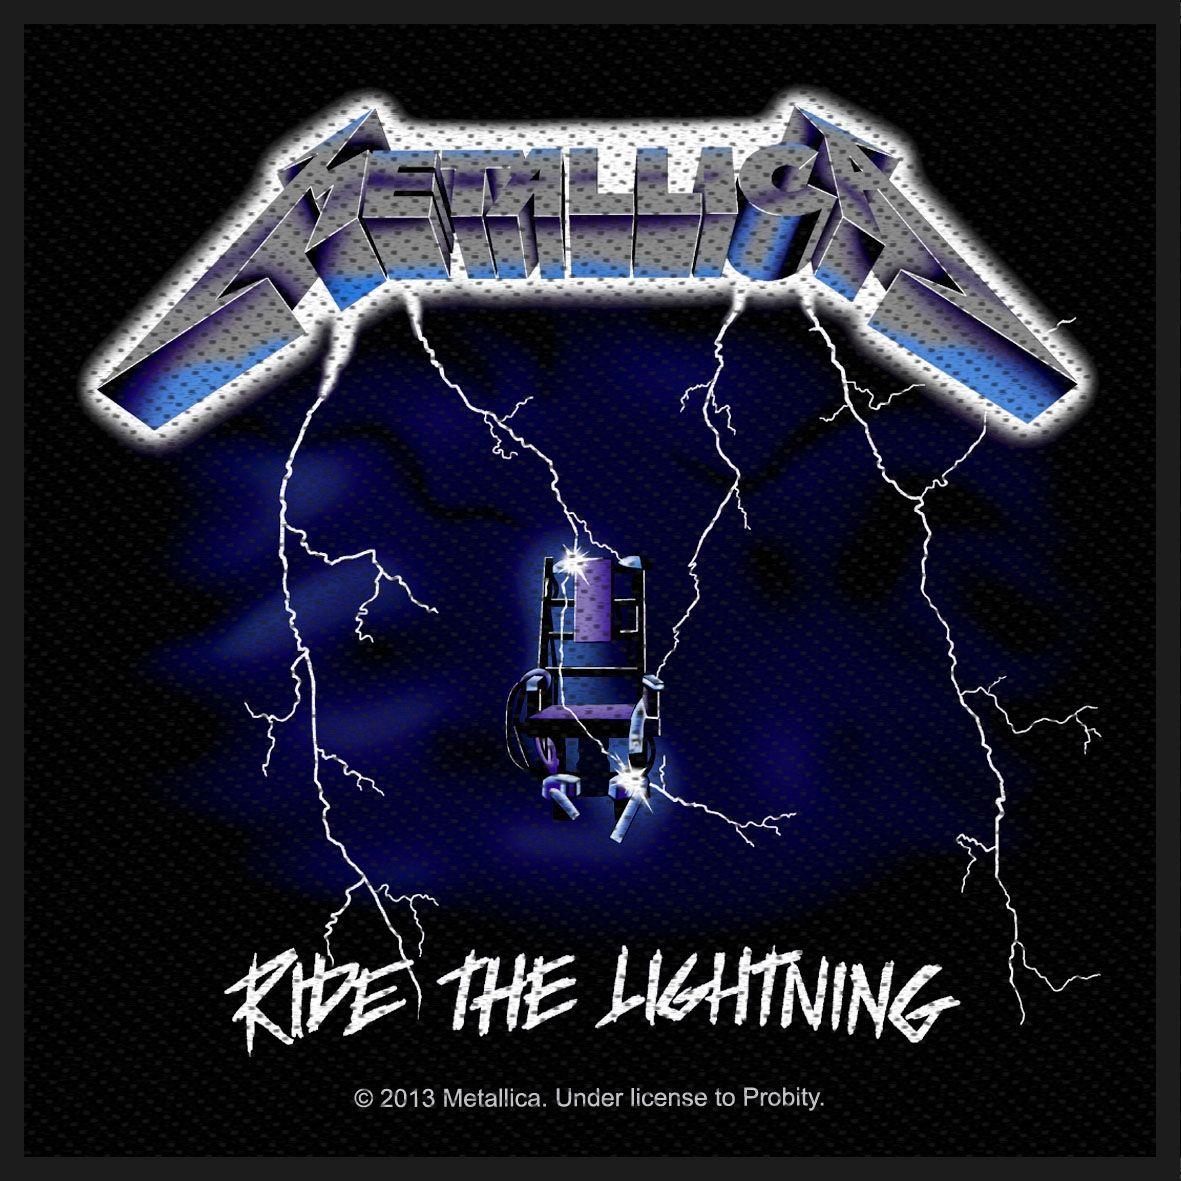 metallica logo ride the lightning